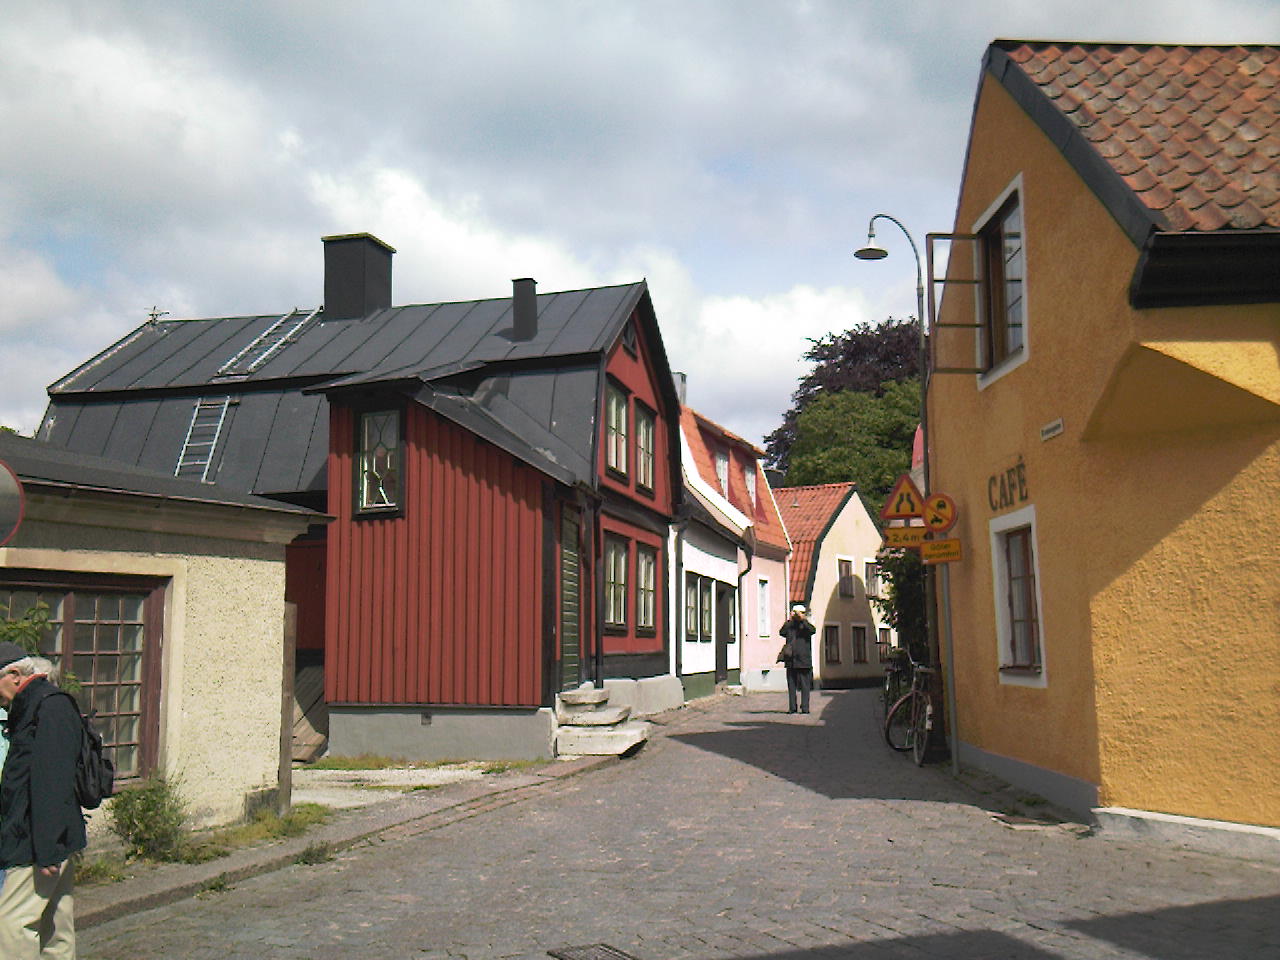 Visby on Gotland